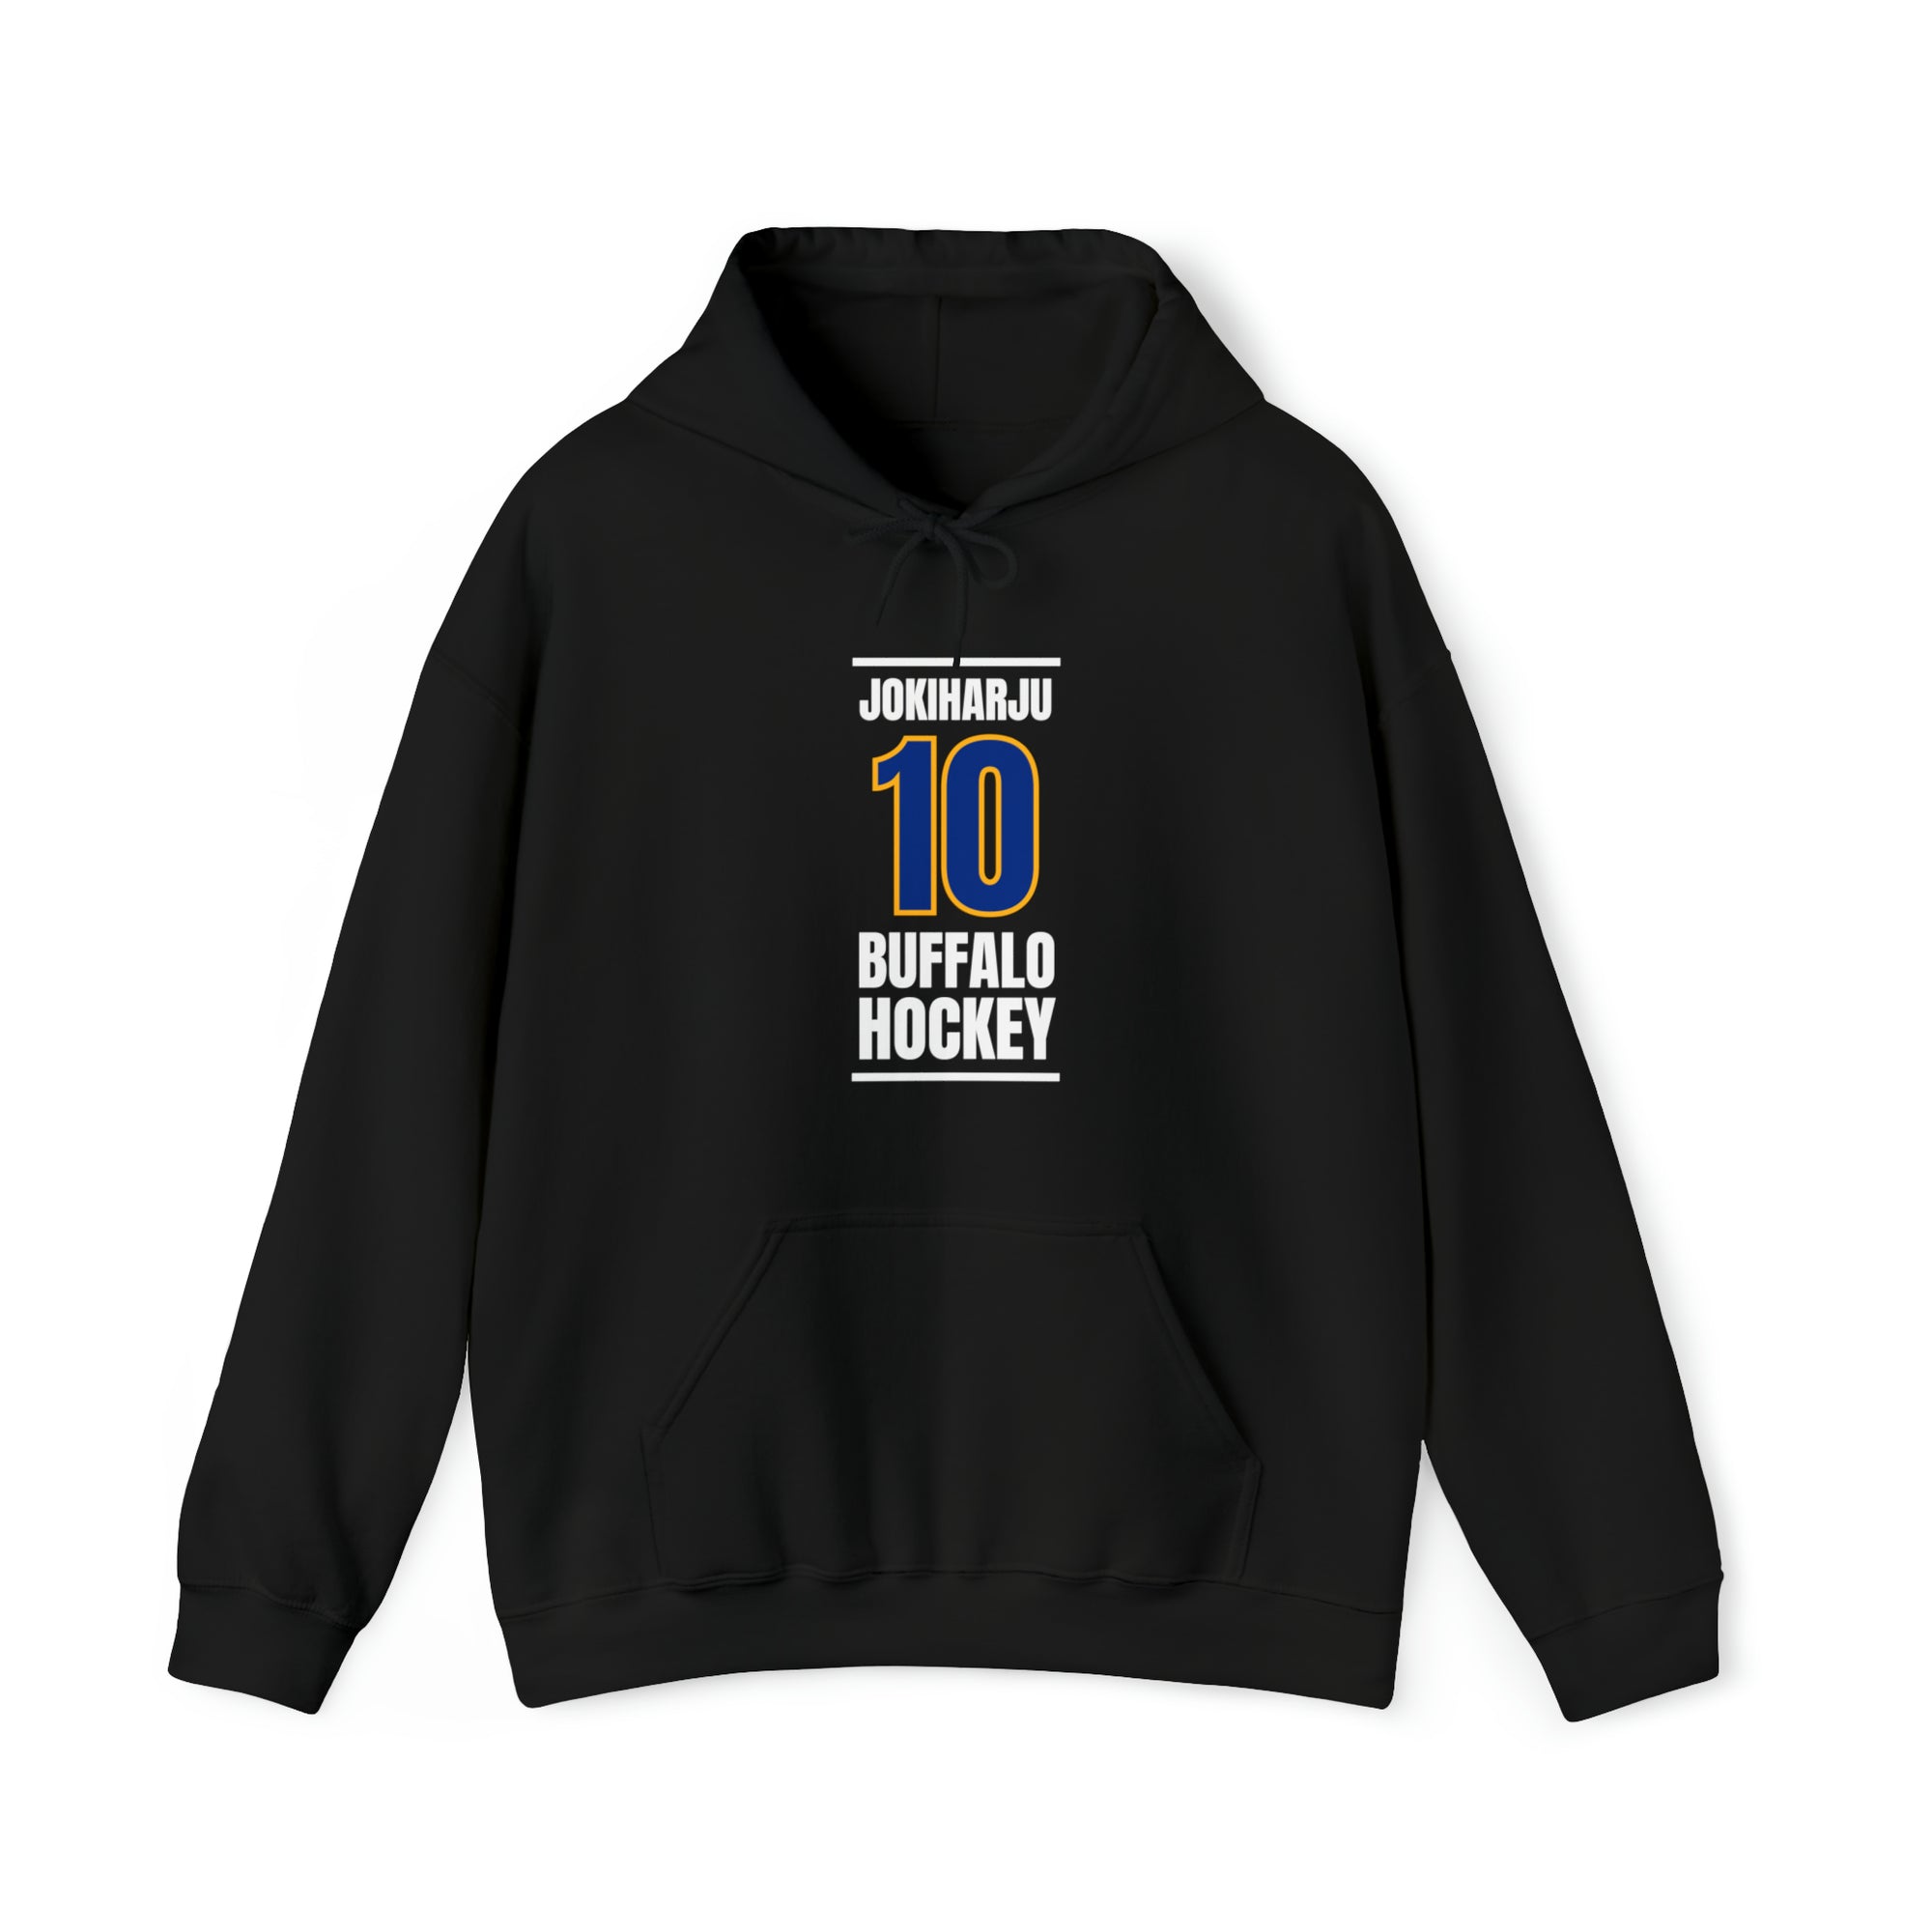 Jokiharju 10 Buffalo Hockey Royal Blue Vertical Design Unisex Hooded Sweatshirt